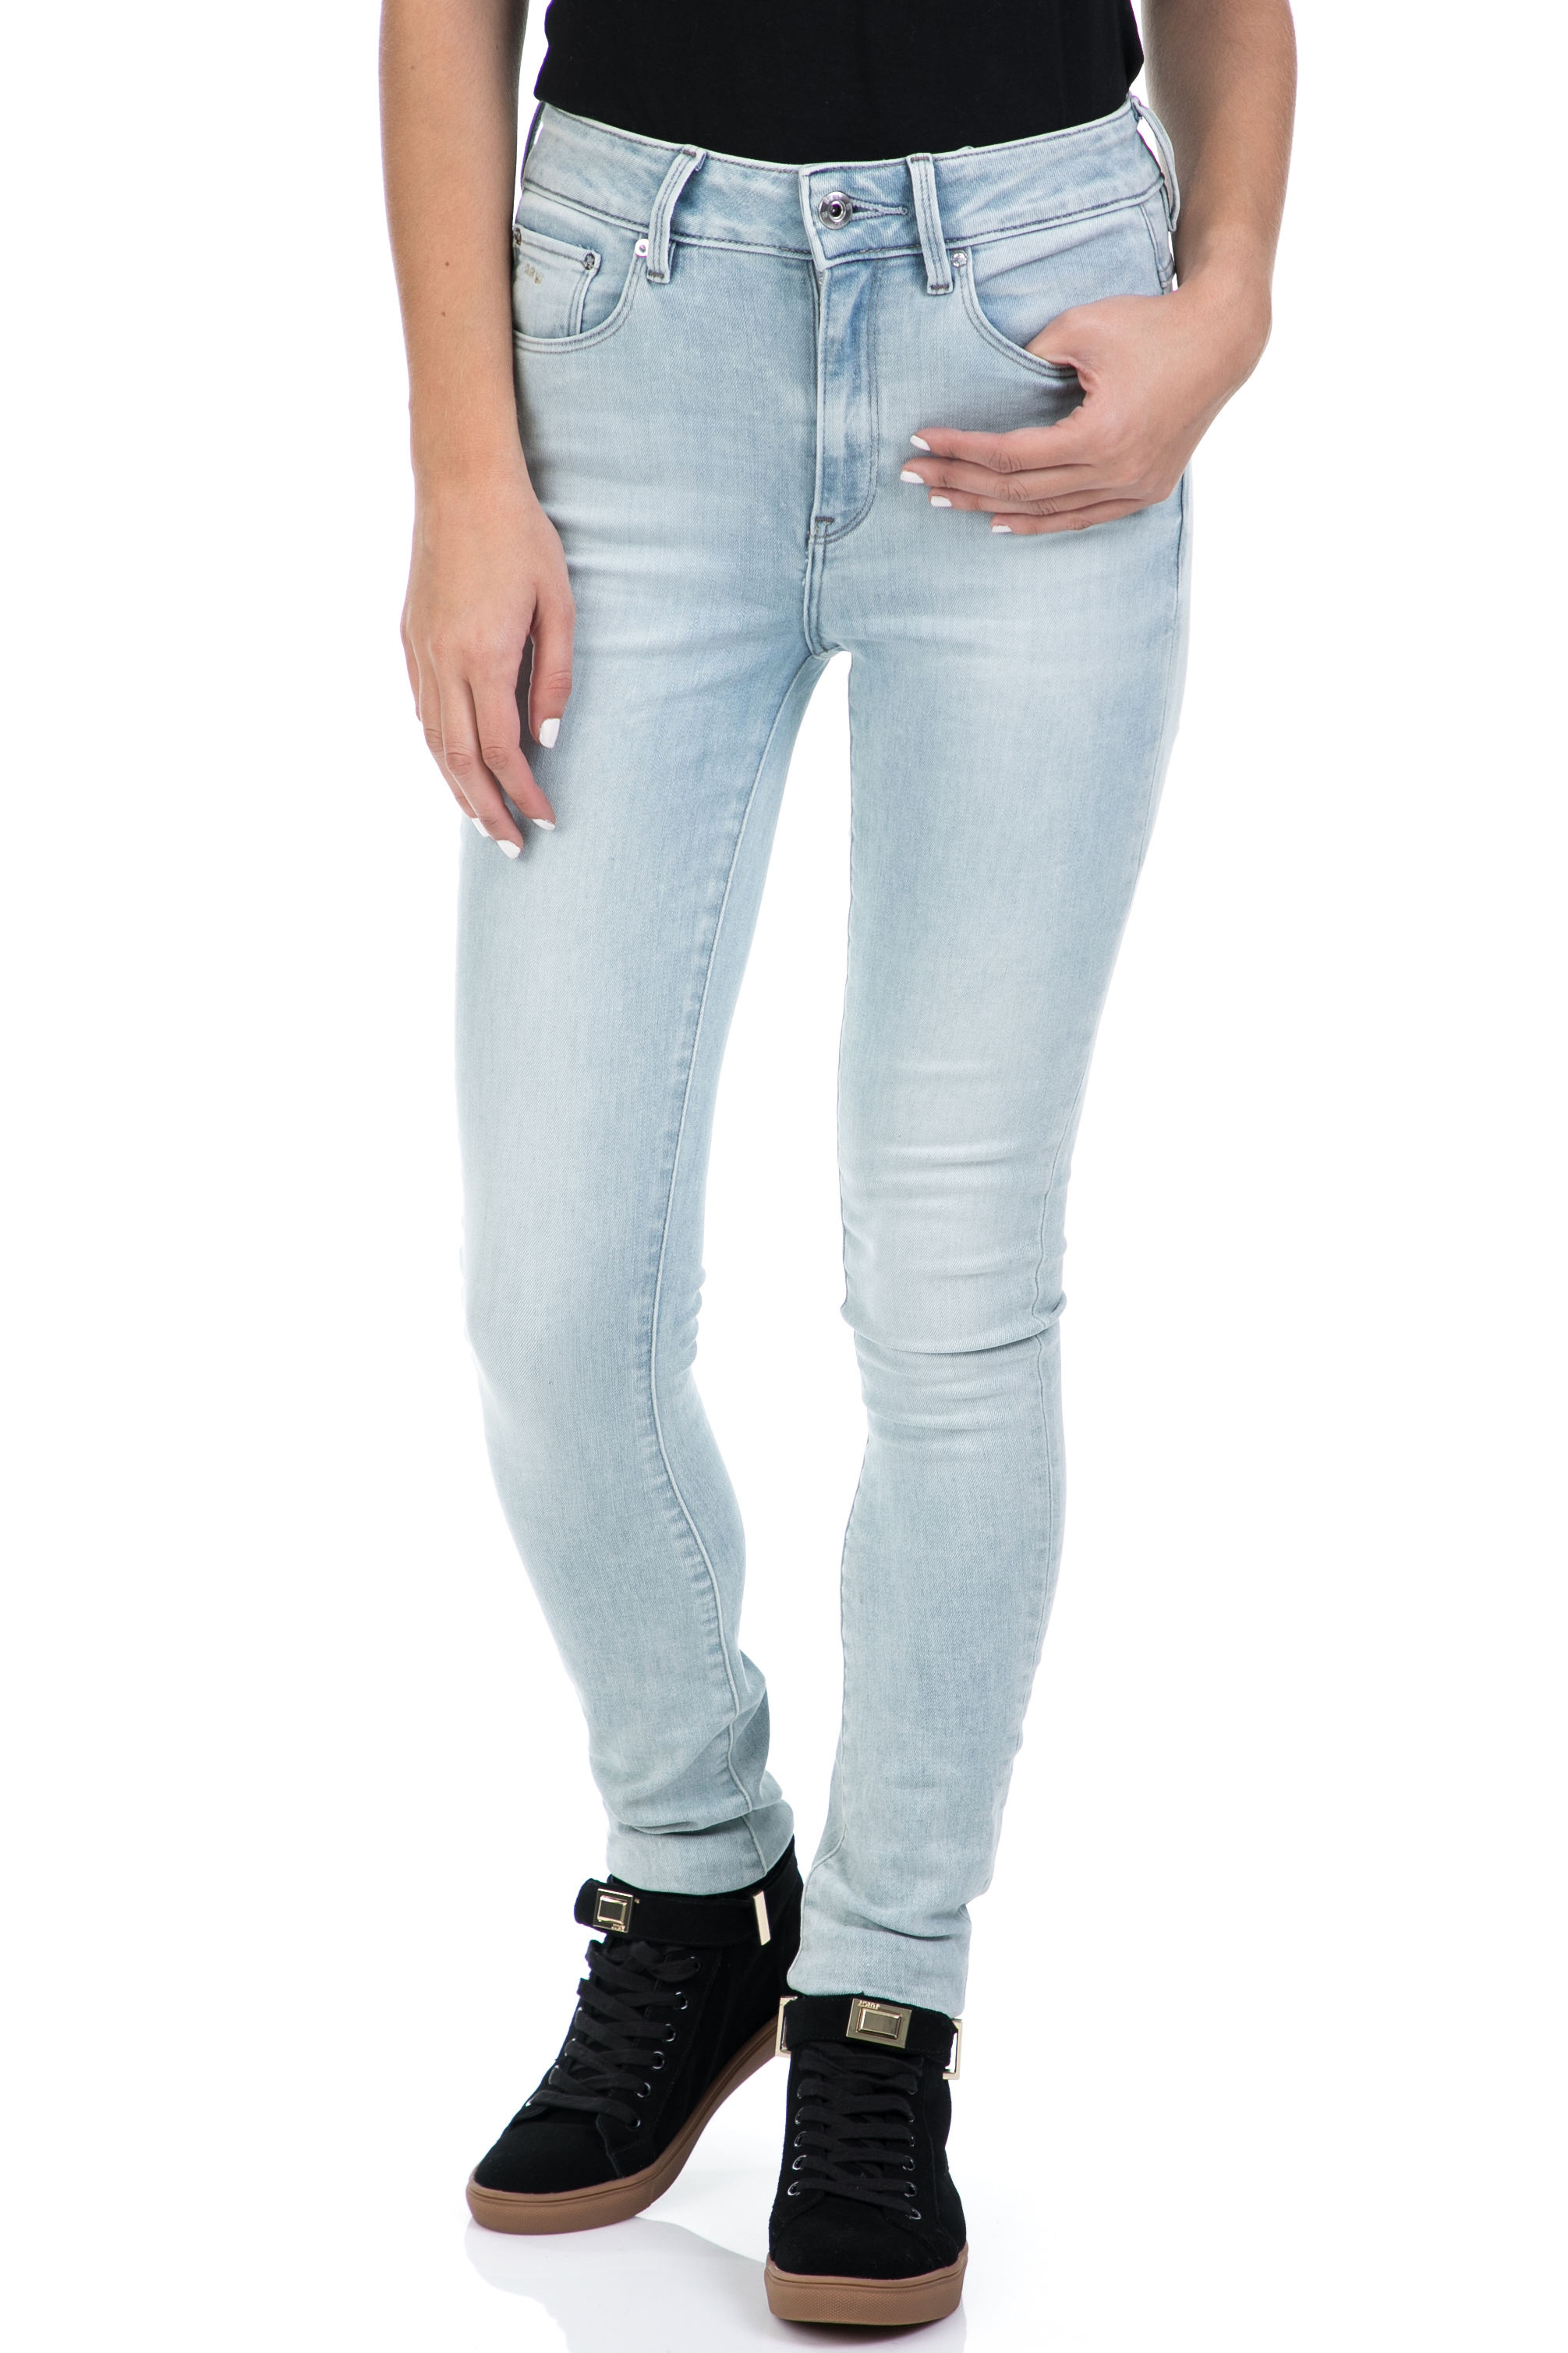 G-STAR RAW - Γυναικείο τζιν παντελόνι 3301 High Skinny μπλε Γυναικεία/Ρούχα/Τζίν/Skinny